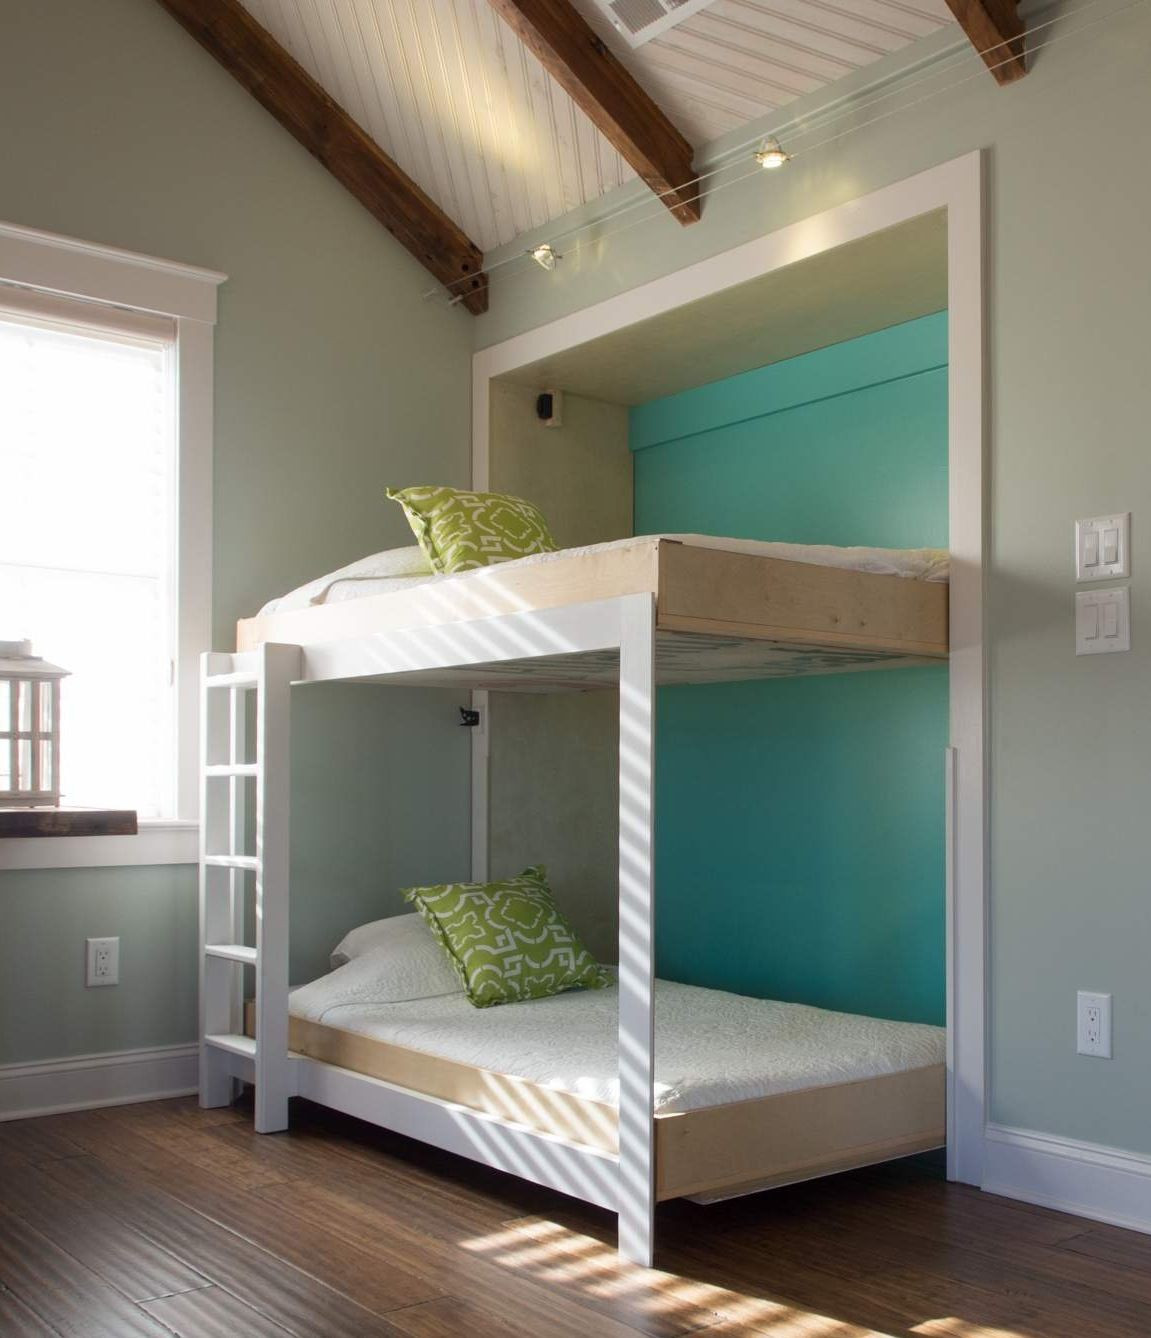 Best ideas about DIY Murphy Bunk Bed
. Save or Pin Best 25 Murphy beds ideas on Pinterest Now.